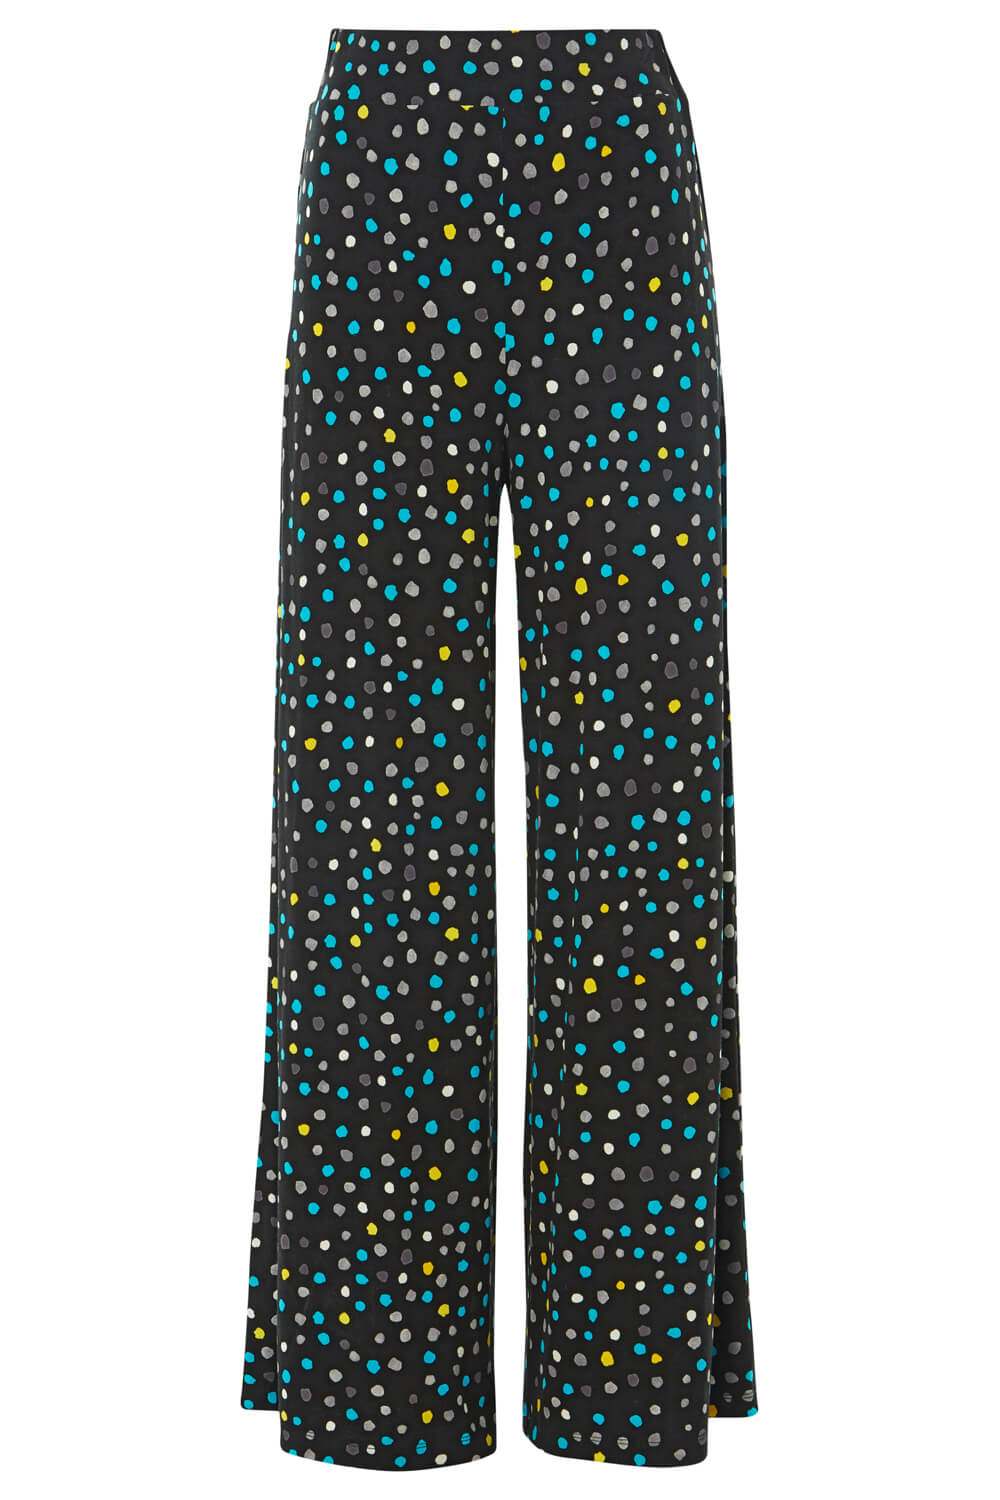 Black Spot Print Wide Leg Trousers, Image 4 of 4